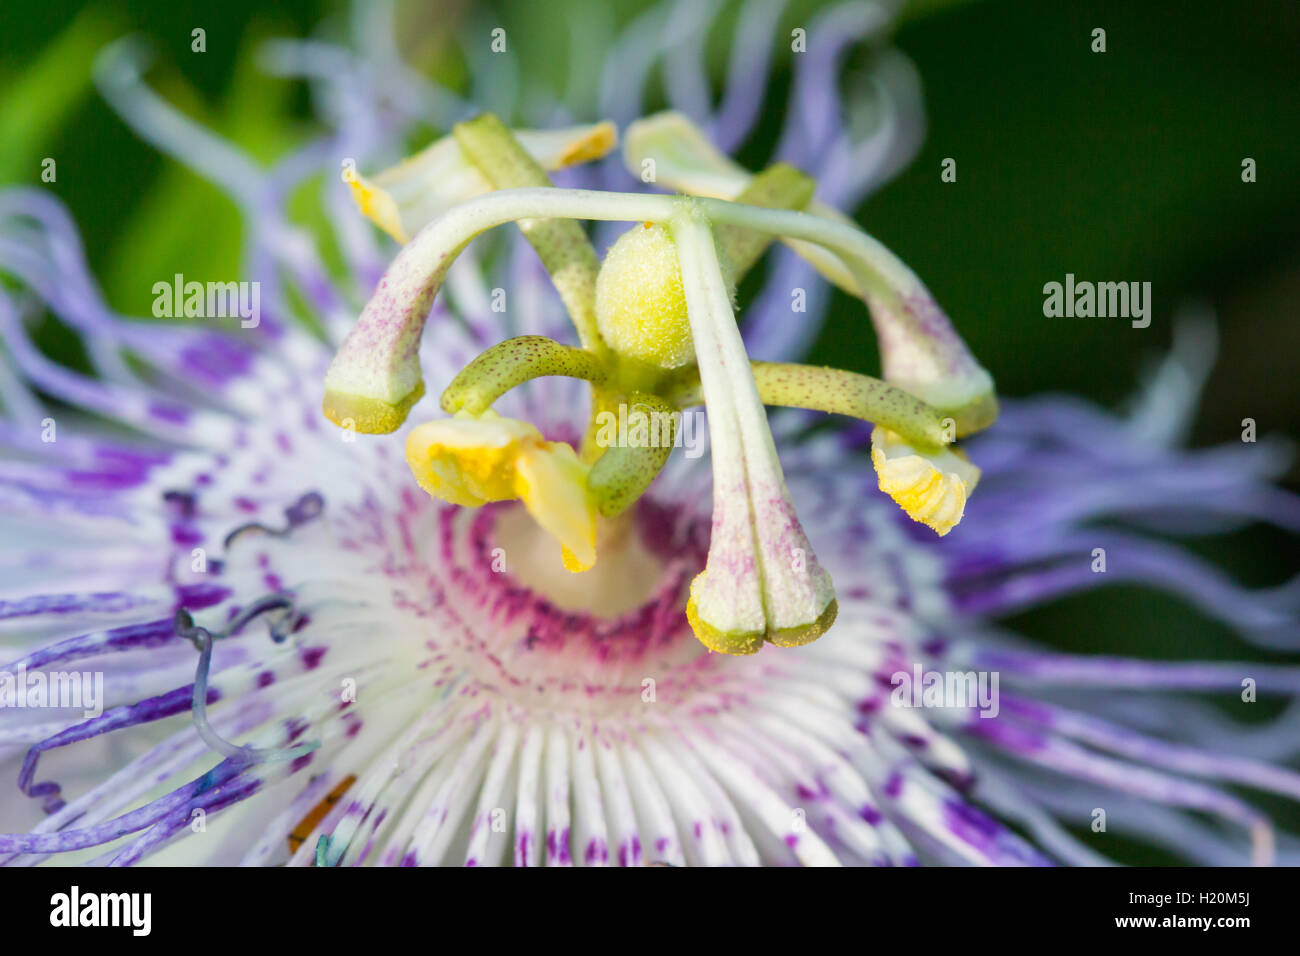 Closeup of a purple passionflower / purple passion vine flower (Passiflora incarnata), Indiana, United States Stock Photo